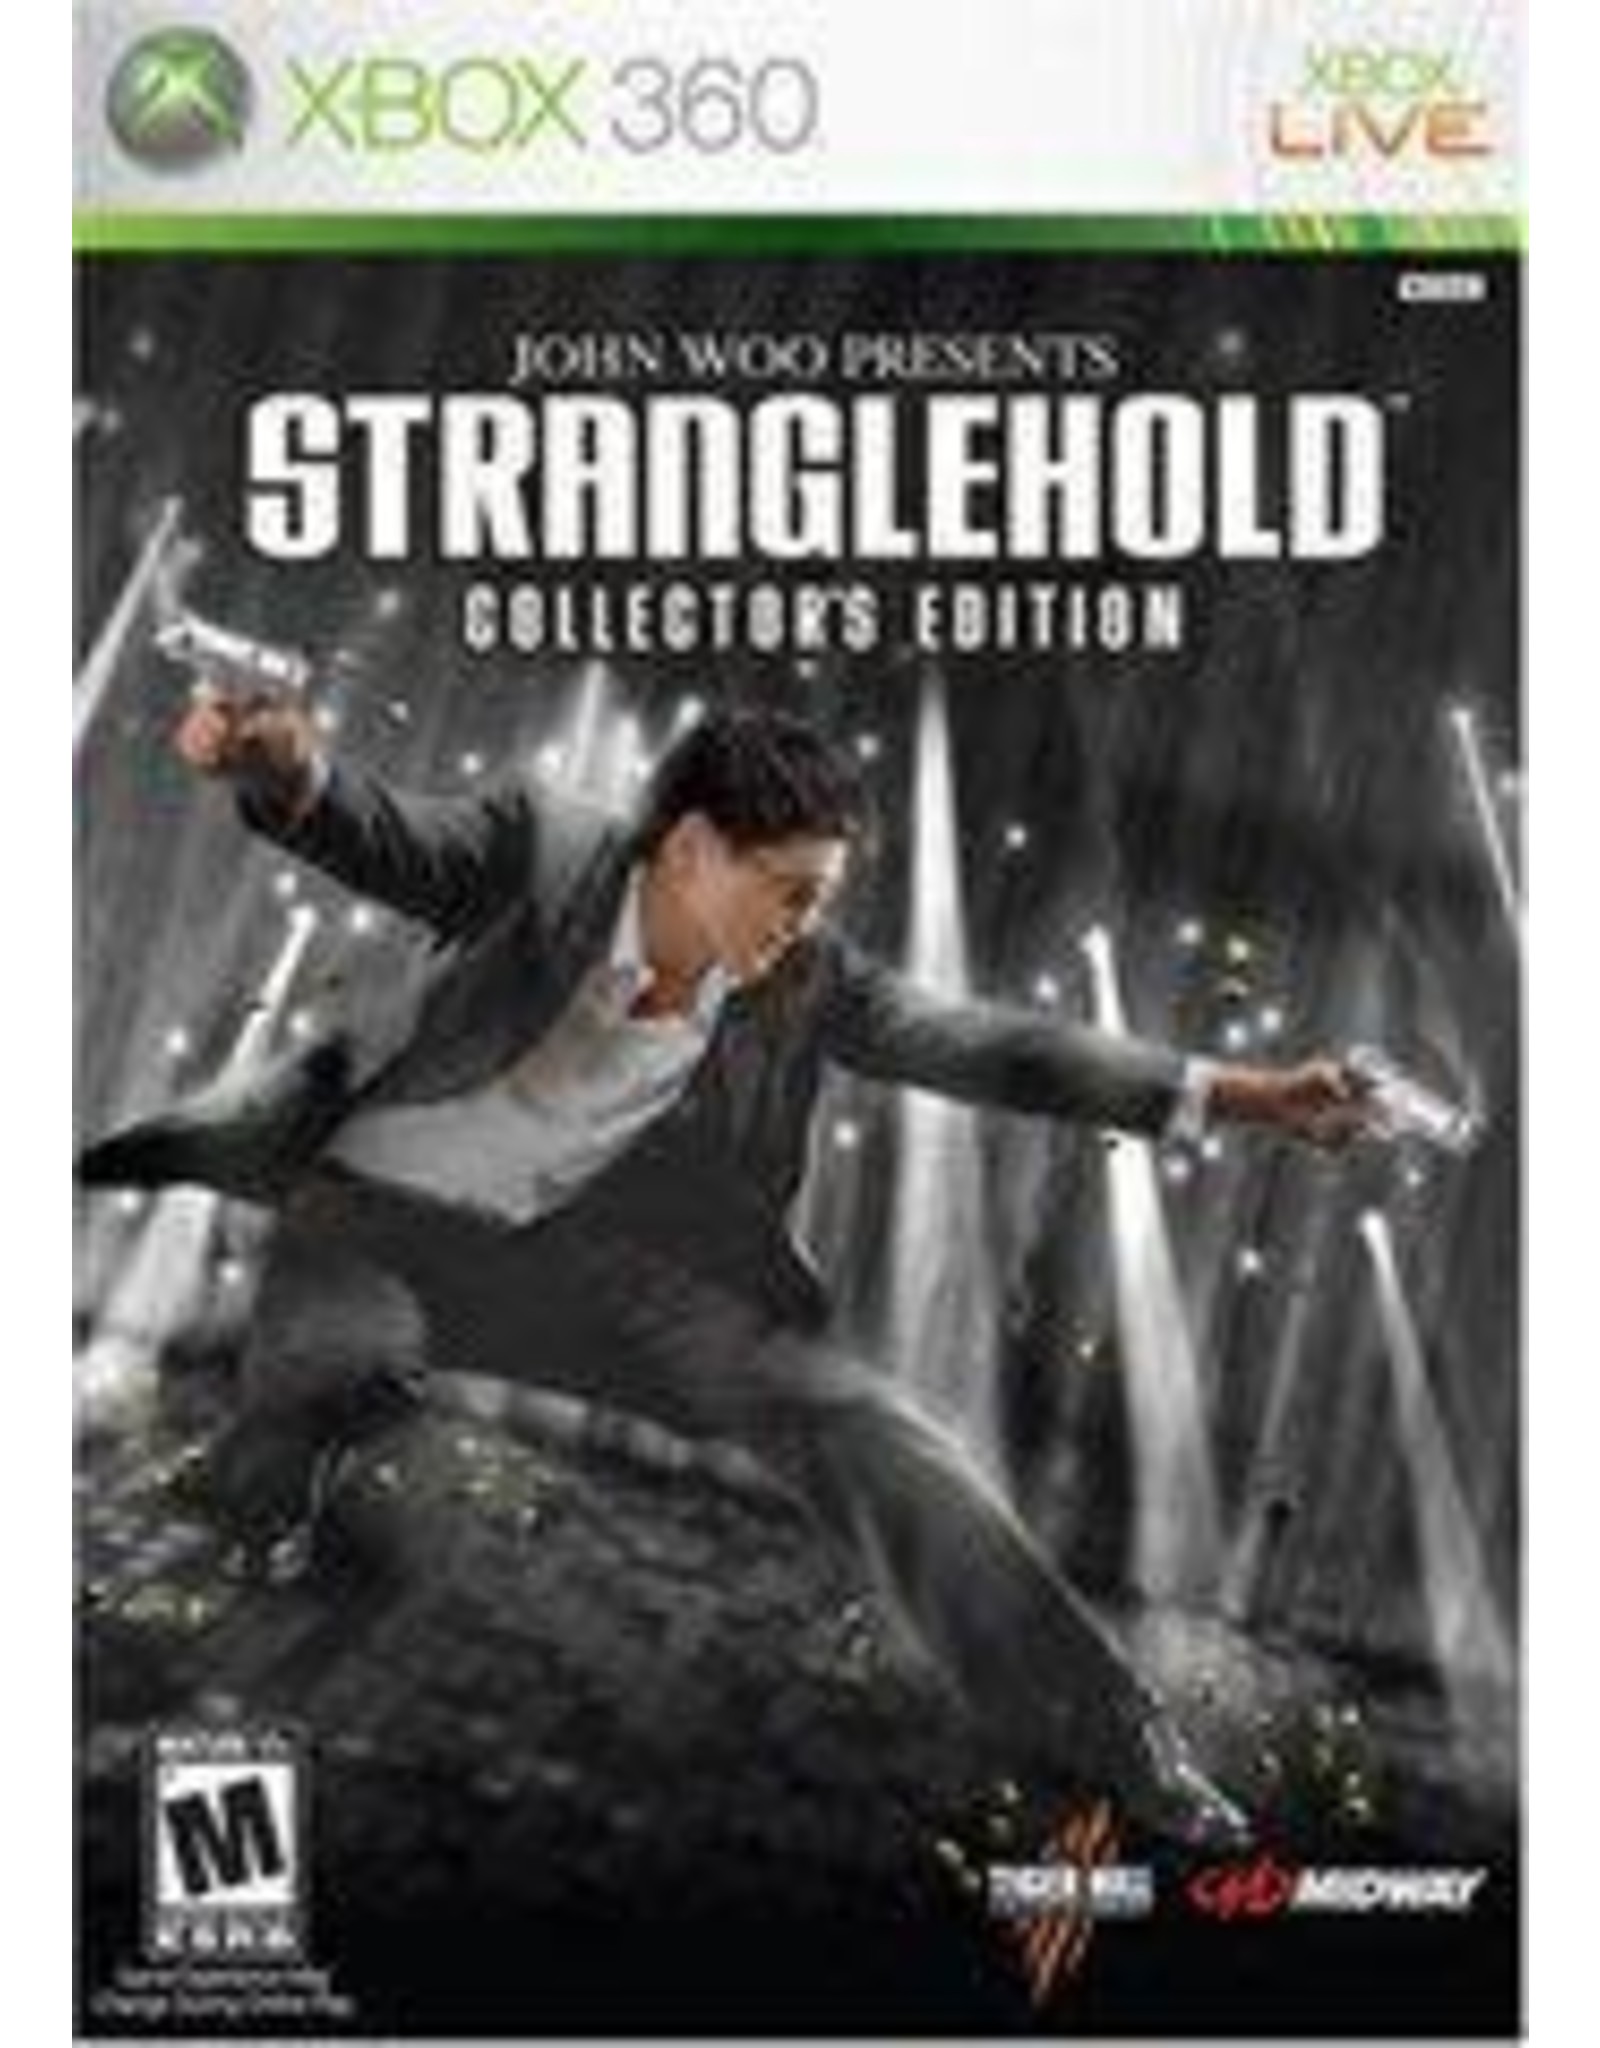 Xbox 360 Stranglehold Collector's Edition (CiB)